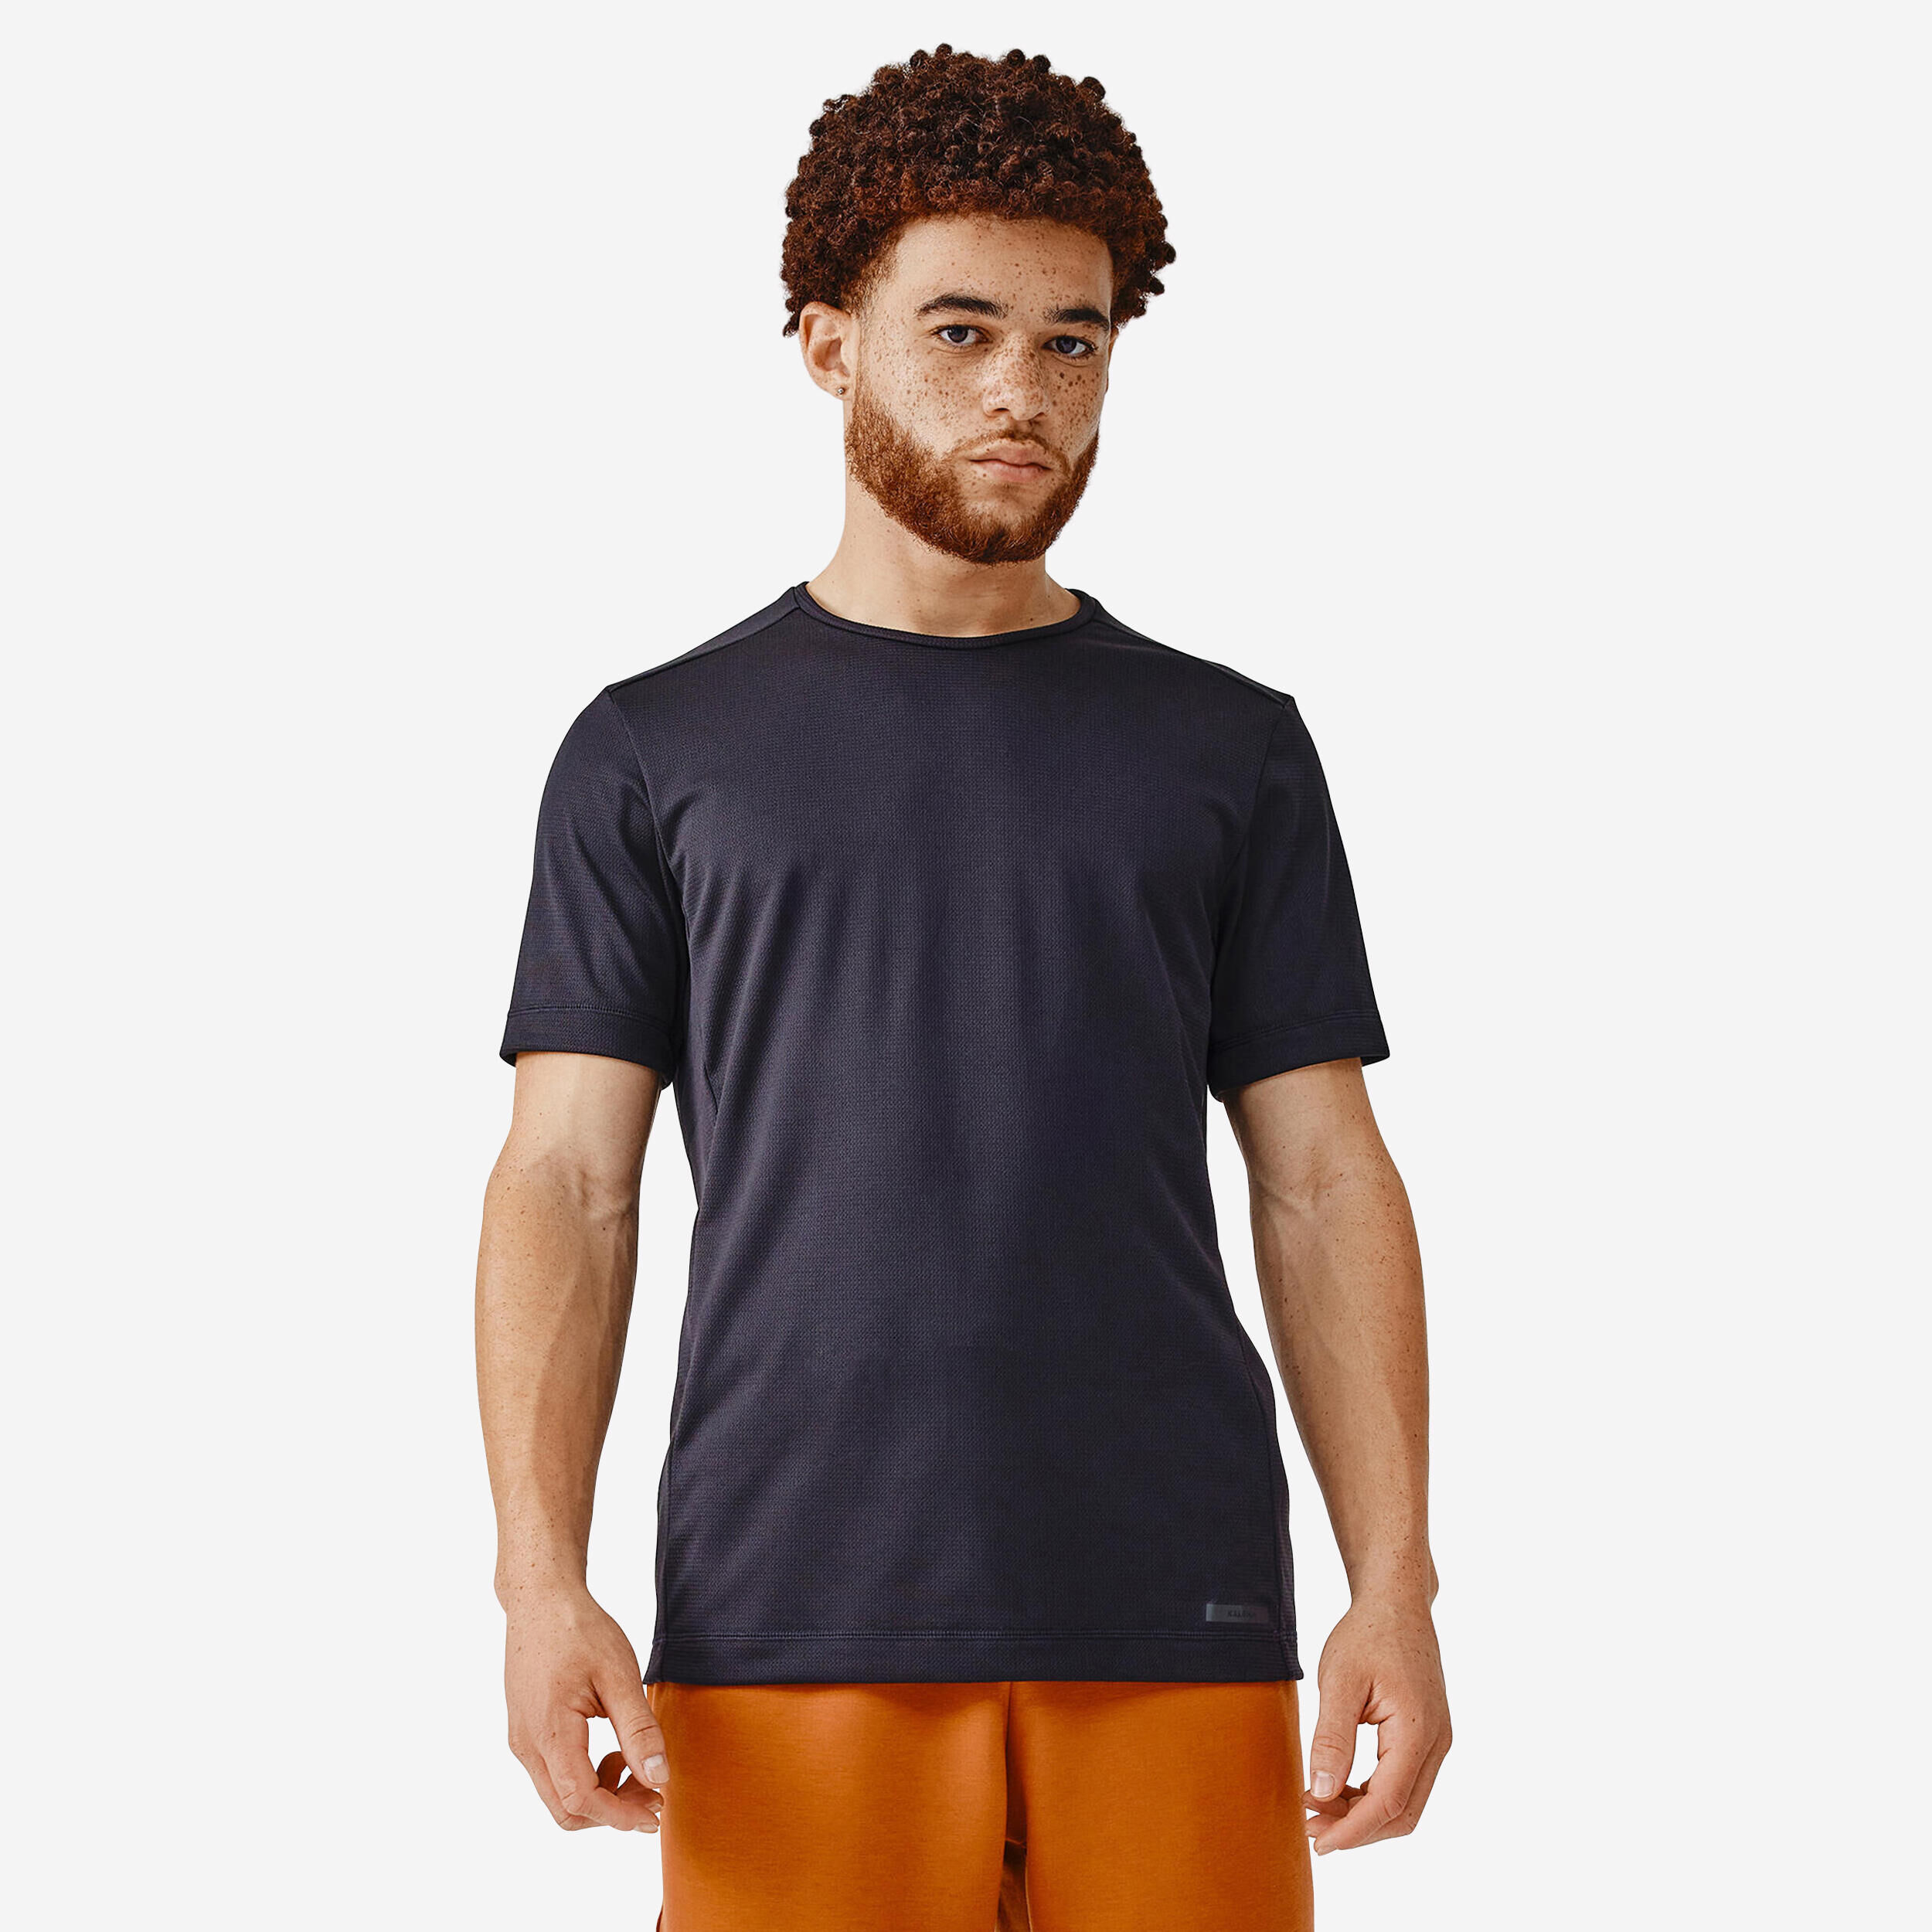 KALENJI KIPRUN 100 Dry Men's Breathable Running T-shirt - Black